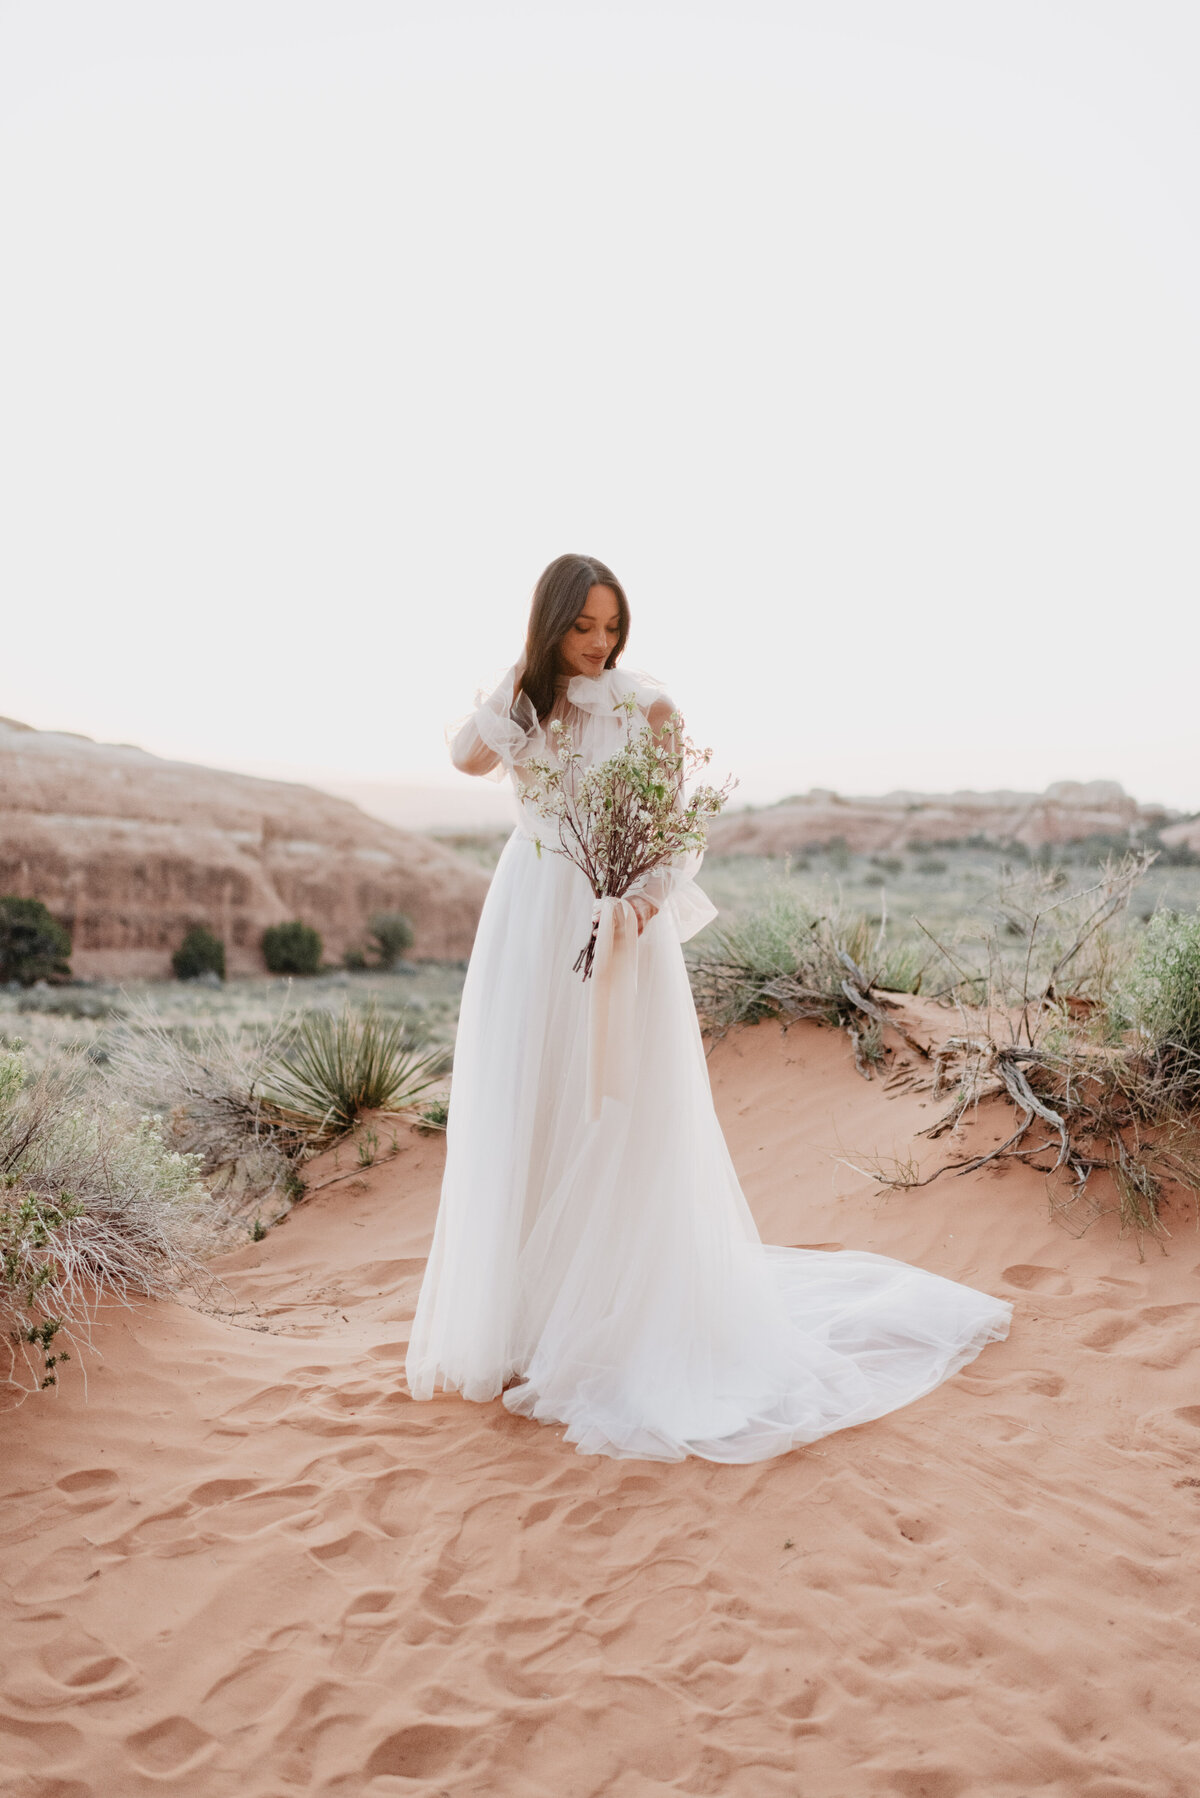 Utah elopement photographer captures bride looking at bouquet during portraits